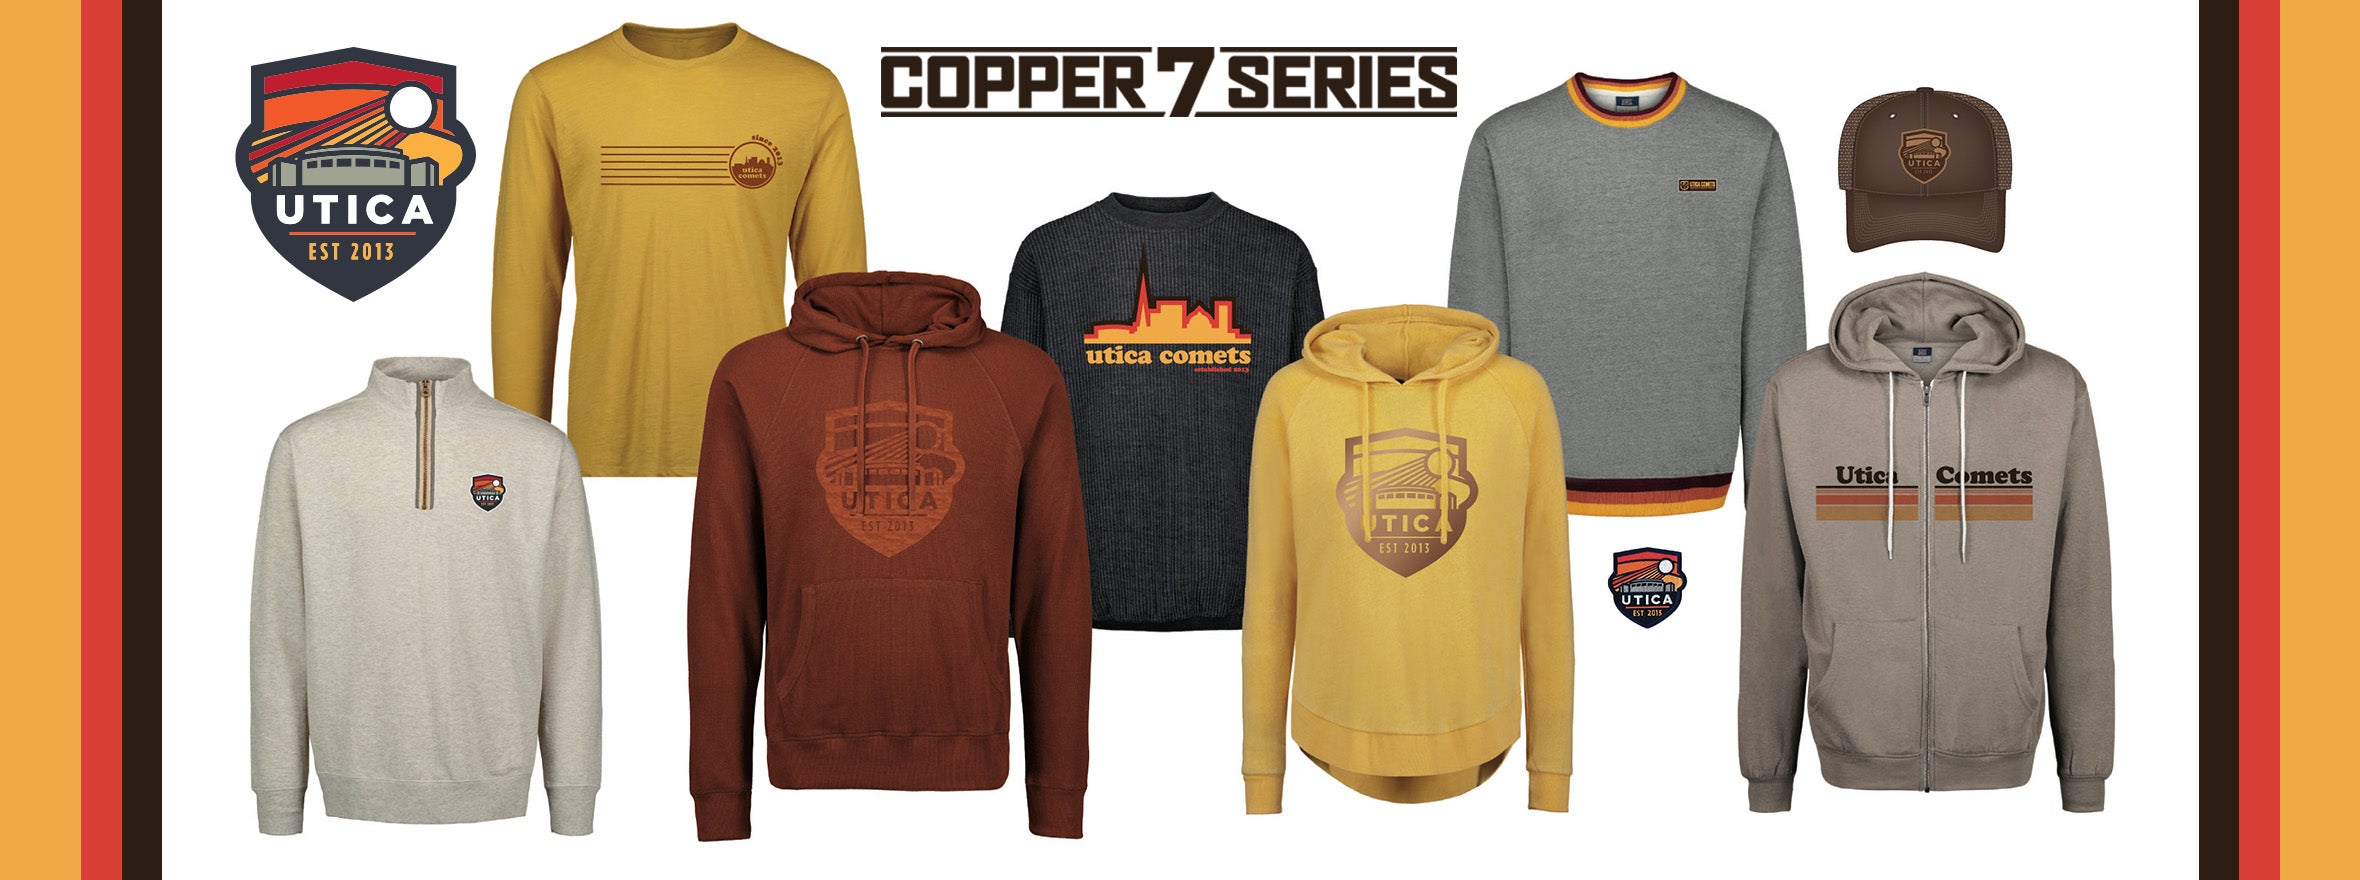 Utica Comets honor seven seasons with Copper 7 Series – SportsLogos.Net News